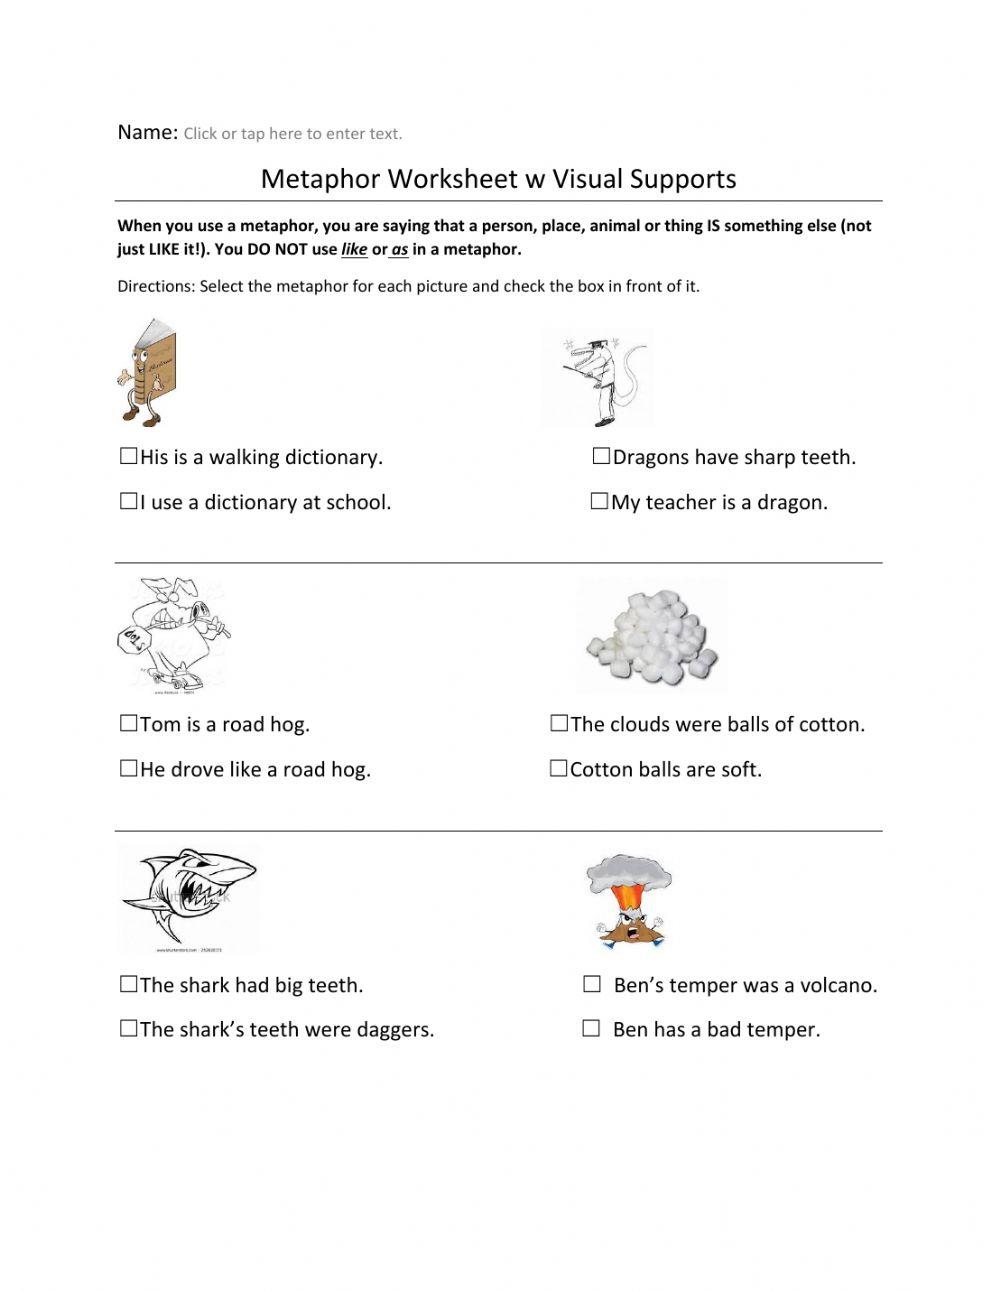 Identify the Metaphor Worksheet